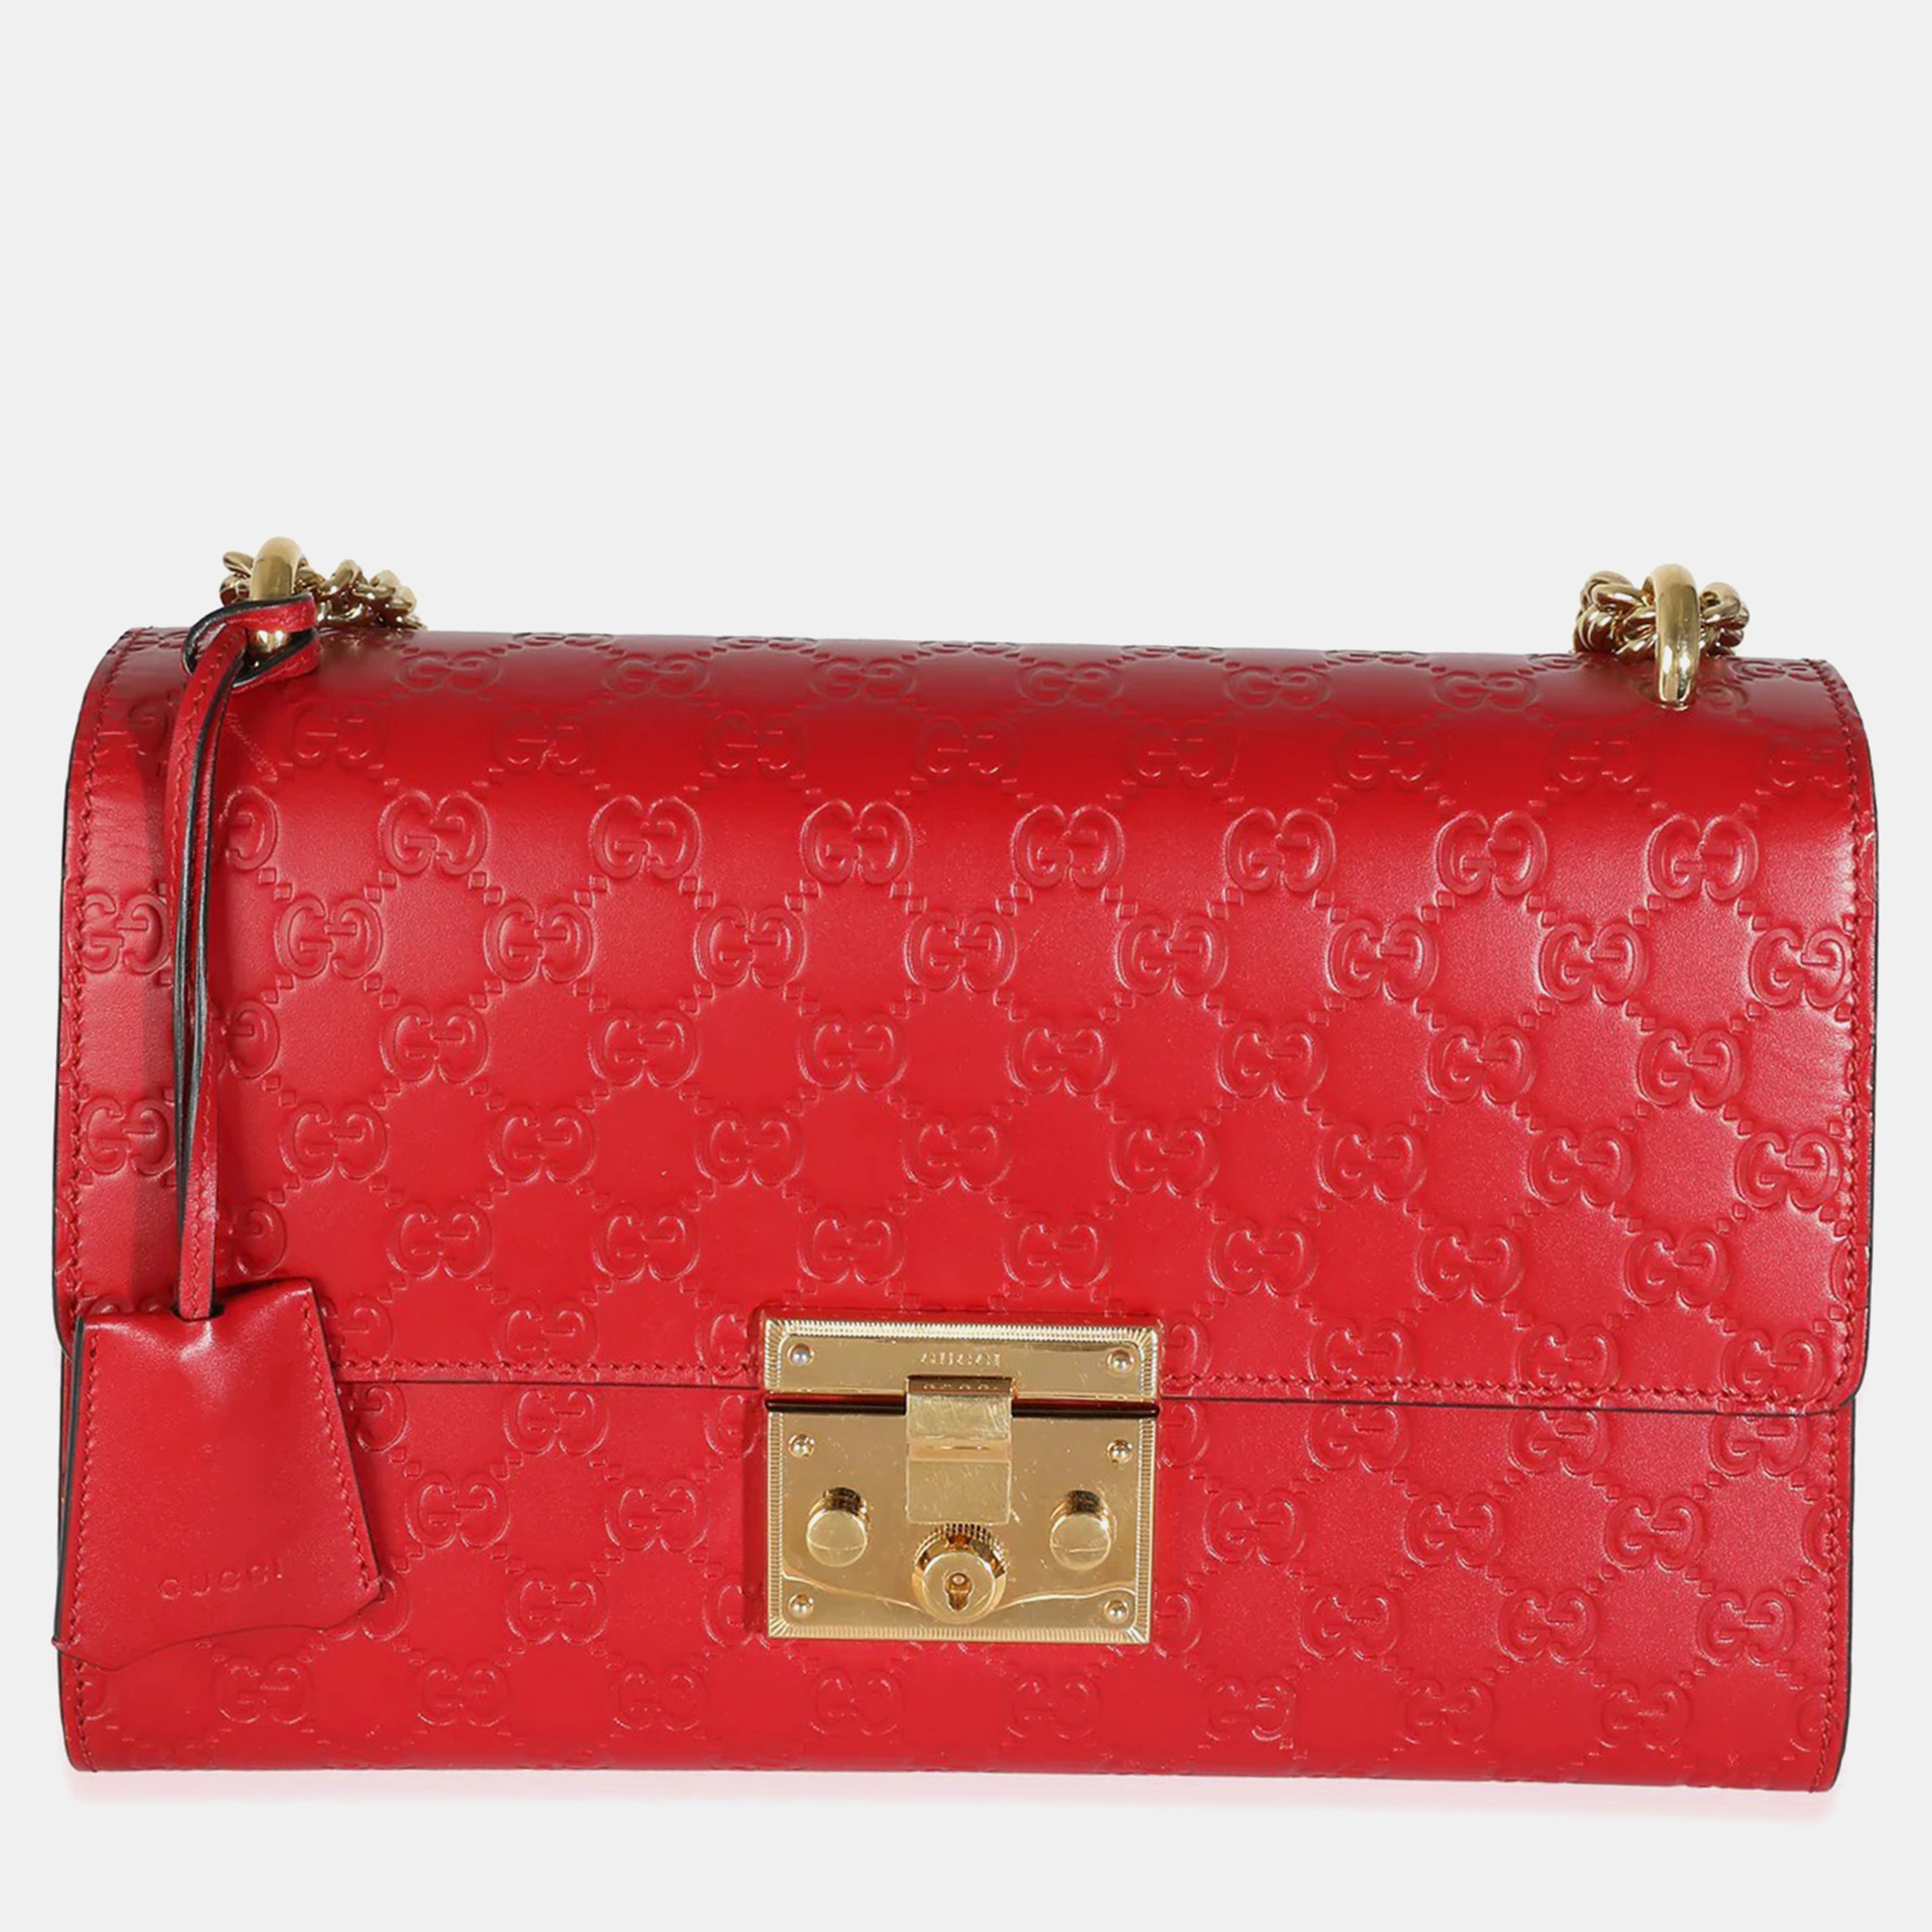 Gucci red leather medium padlock shoulder bag